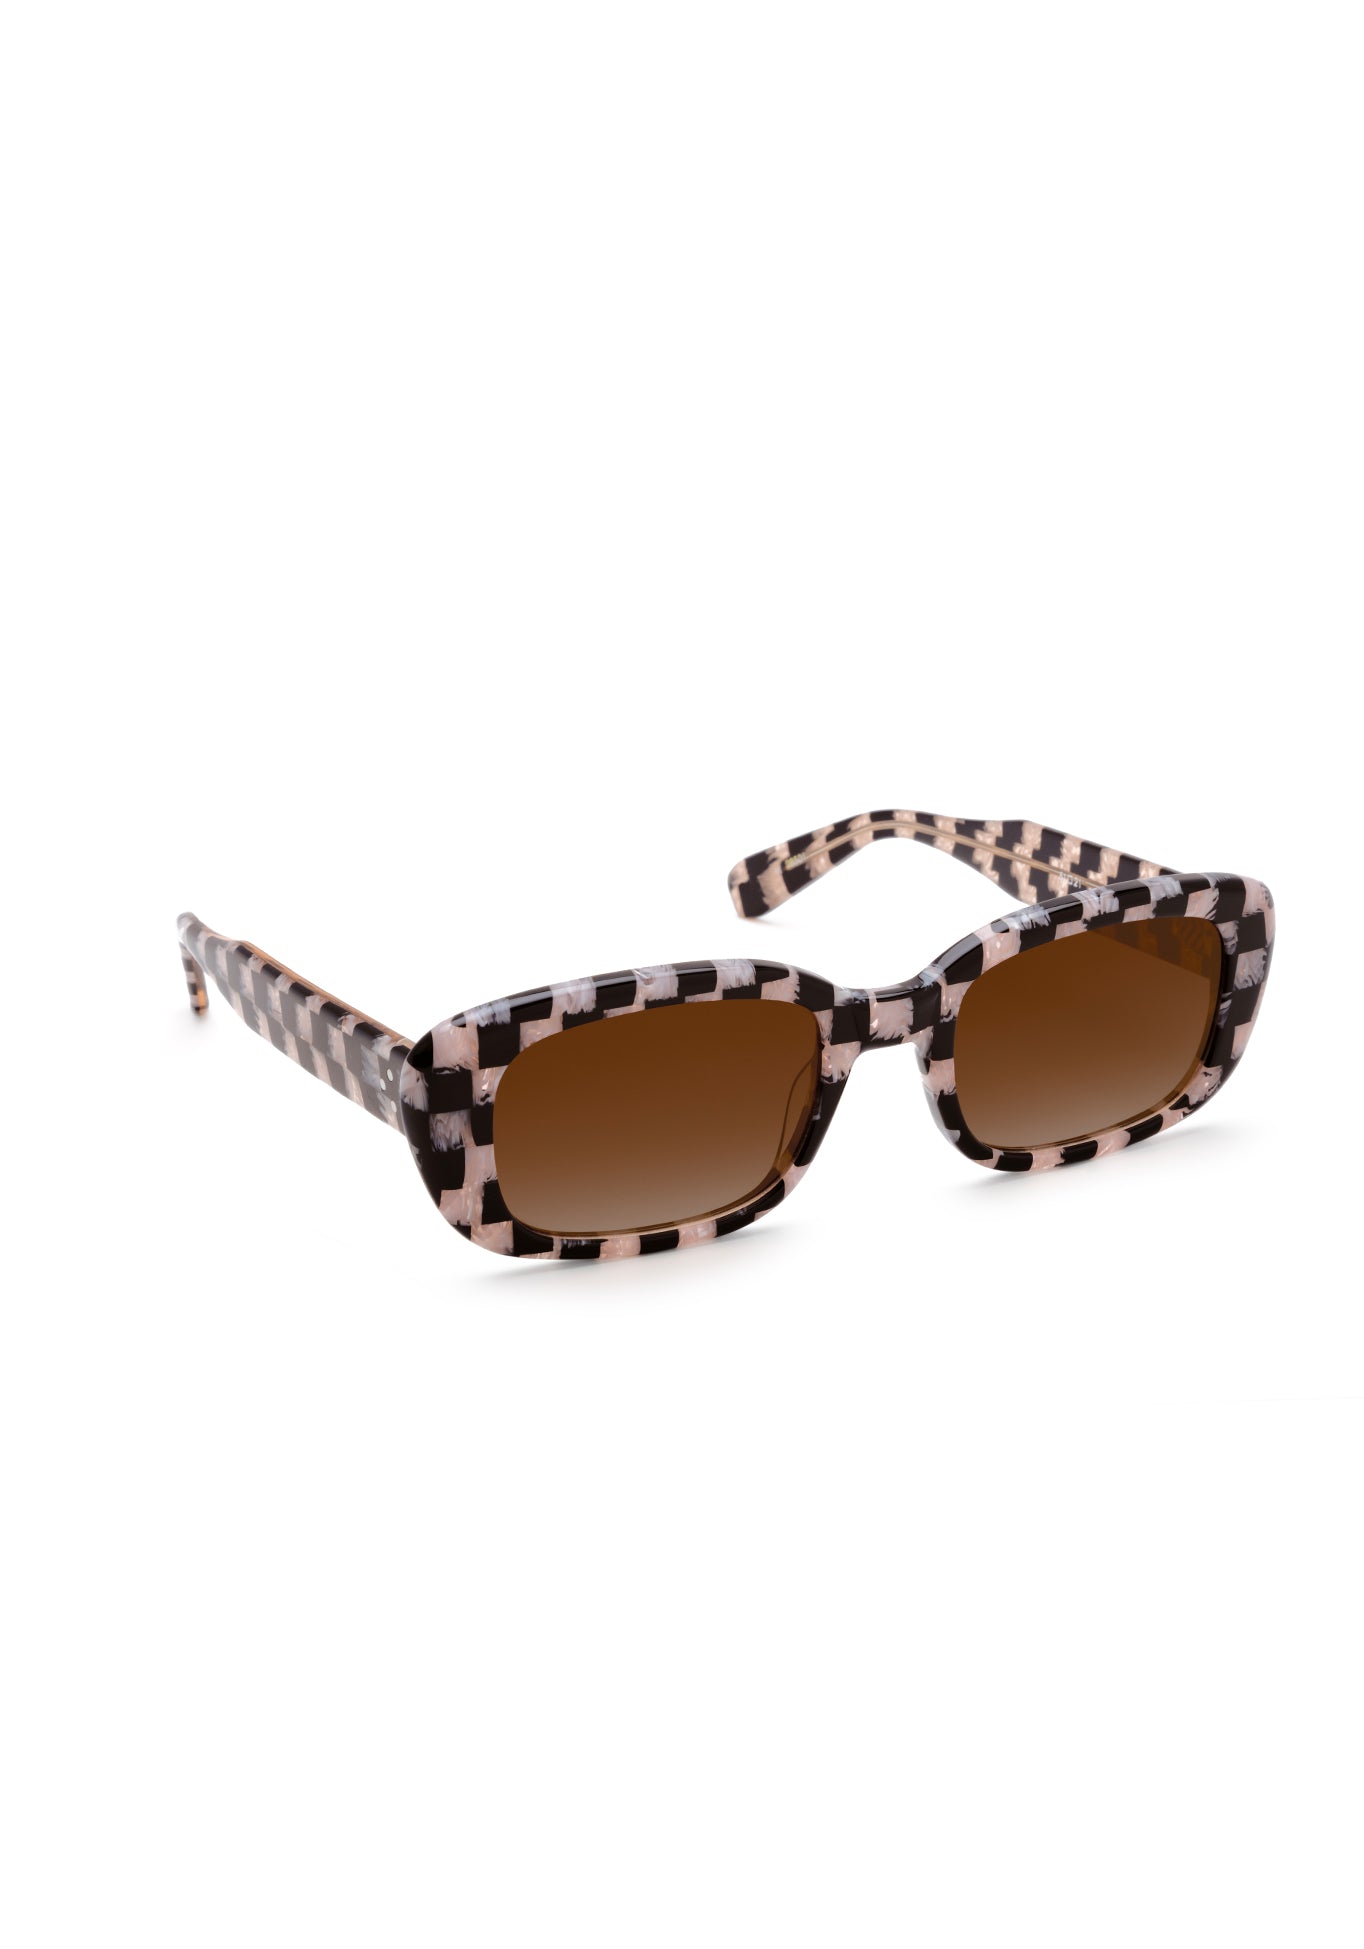 KREWE SUNGLASSES - MILAN | Harlequin + Harlequin over Petal handcrafted, pink and black checkered rectangular sunglasses